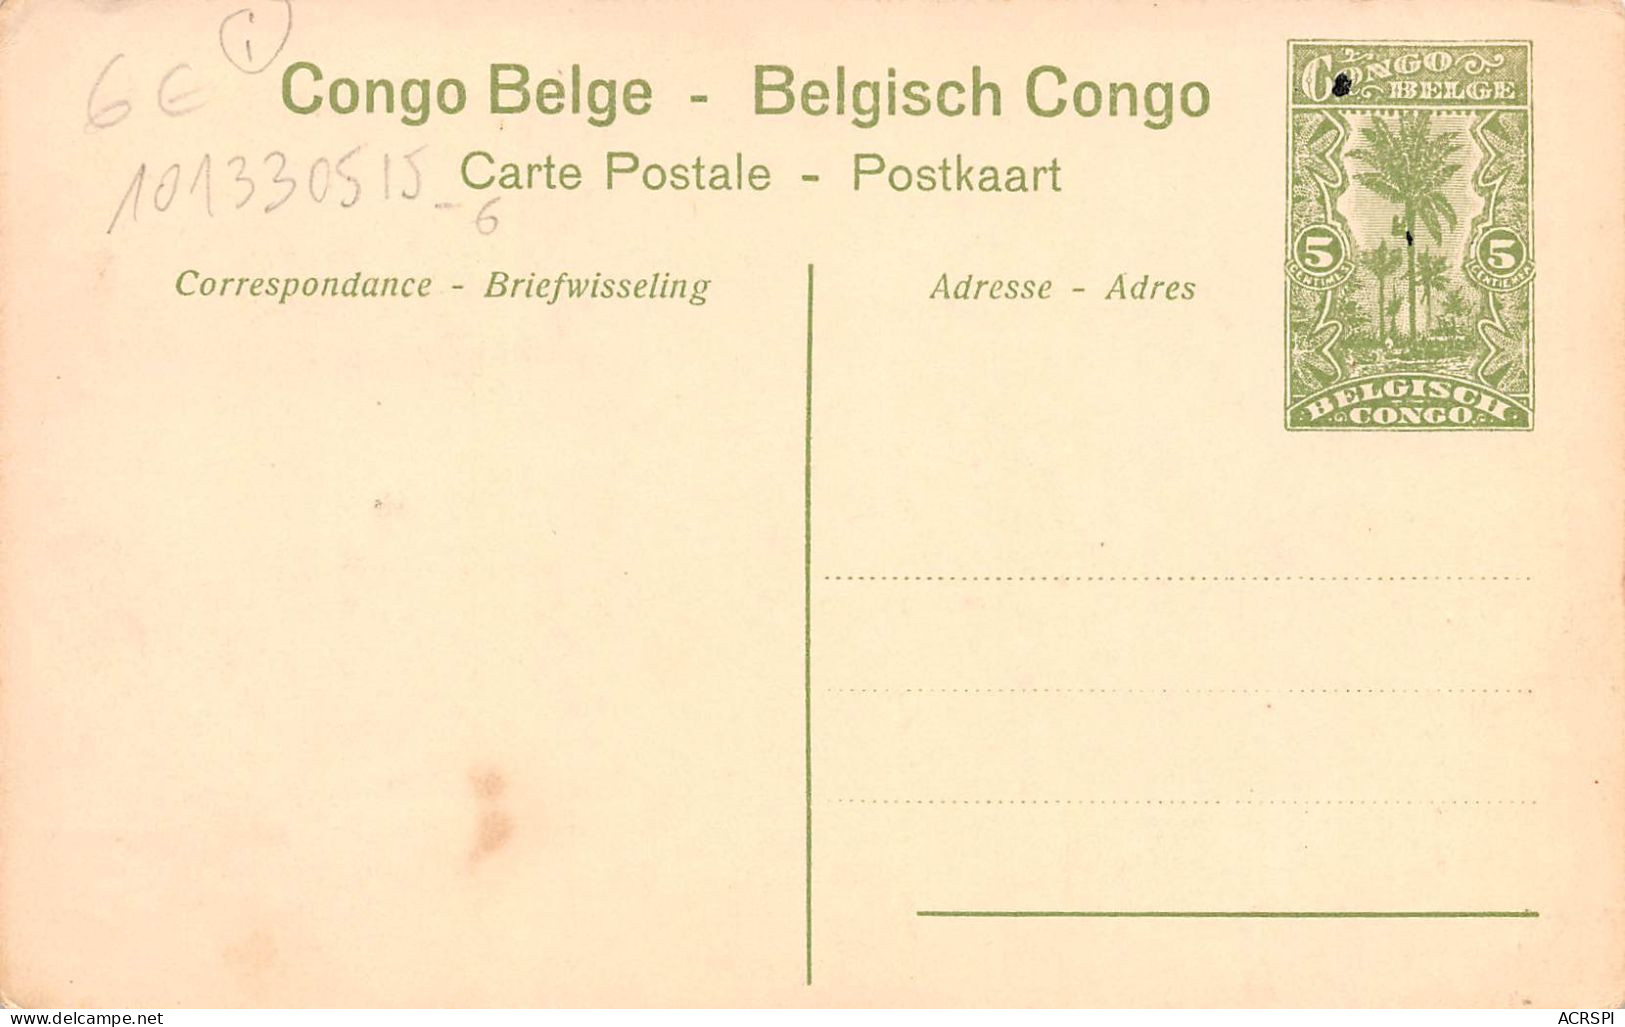 CONGO KINSHASA Katanga - Kabinda - Le Greffe Et La Force Publique Belgisch CONGO Belge (2 Scans) N° 37 \ML4034 - Kinshasa - Léopoldville